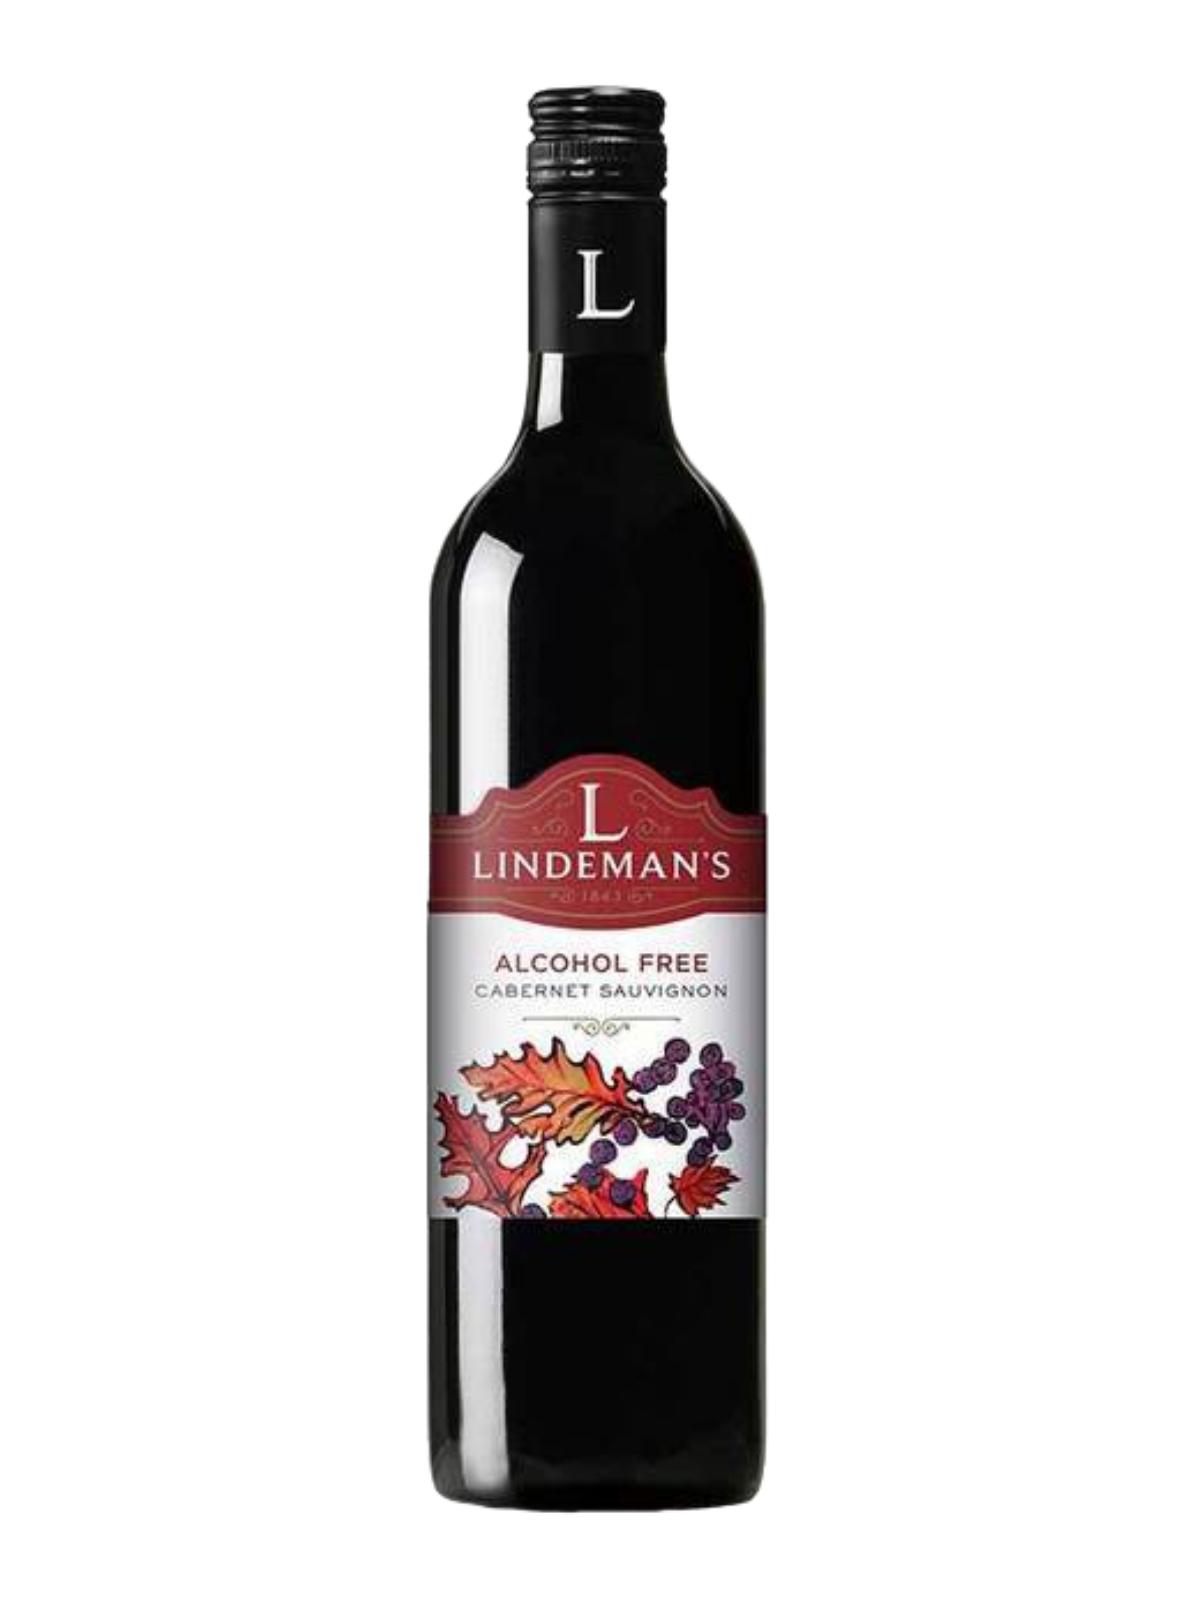 bottle of Lindemans non-alcoholic cabernet sauvignon on a white background.